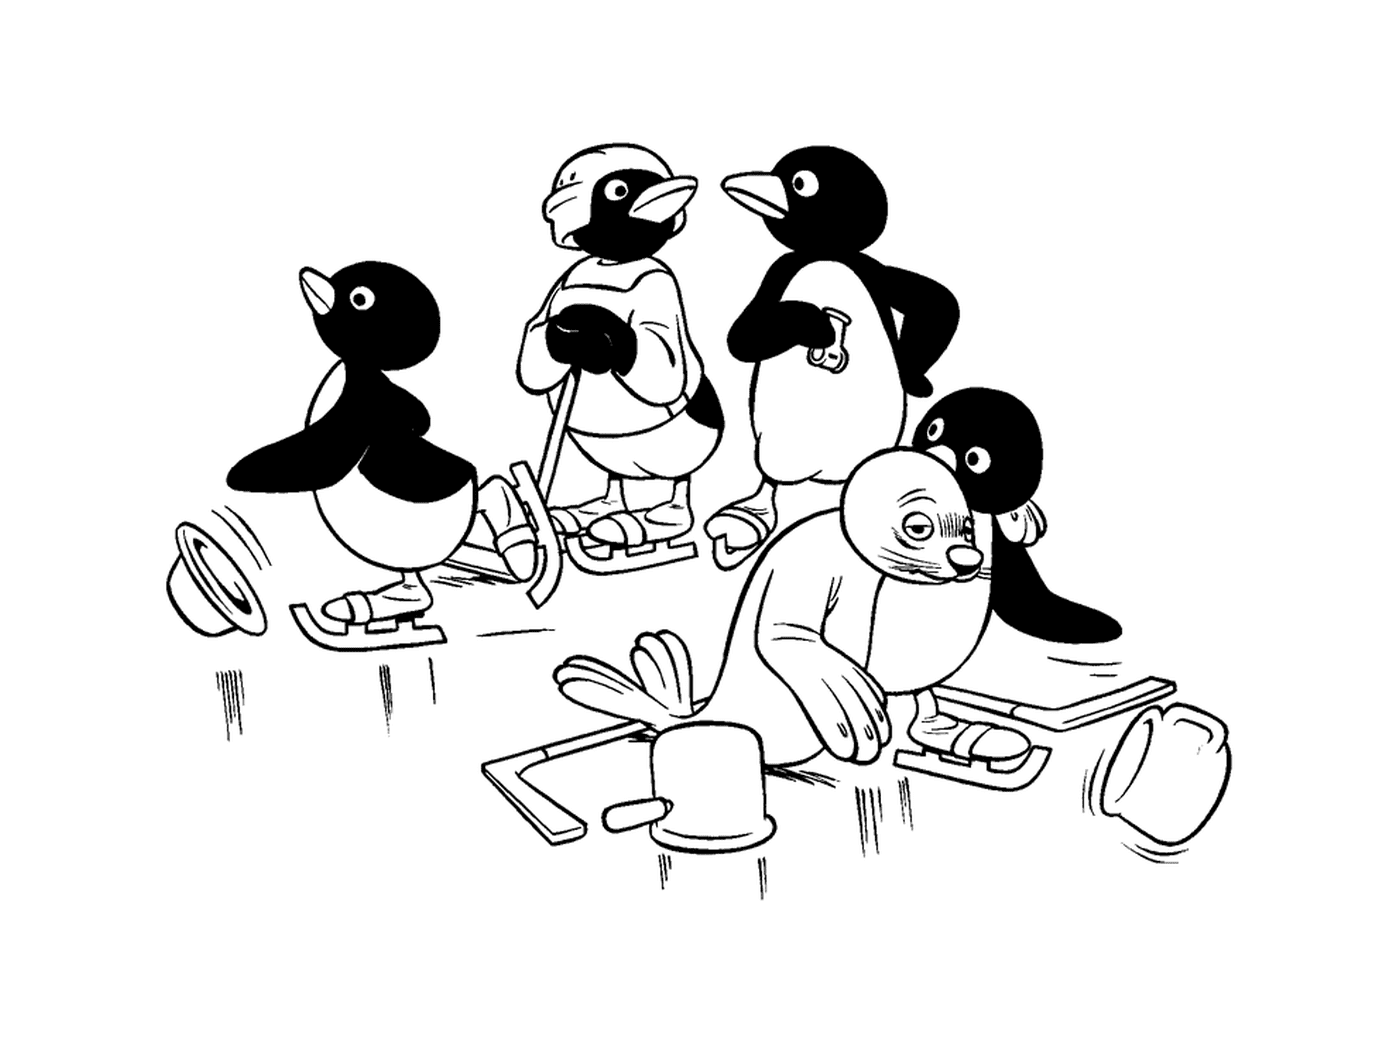  Pingu spielt Eishockey 